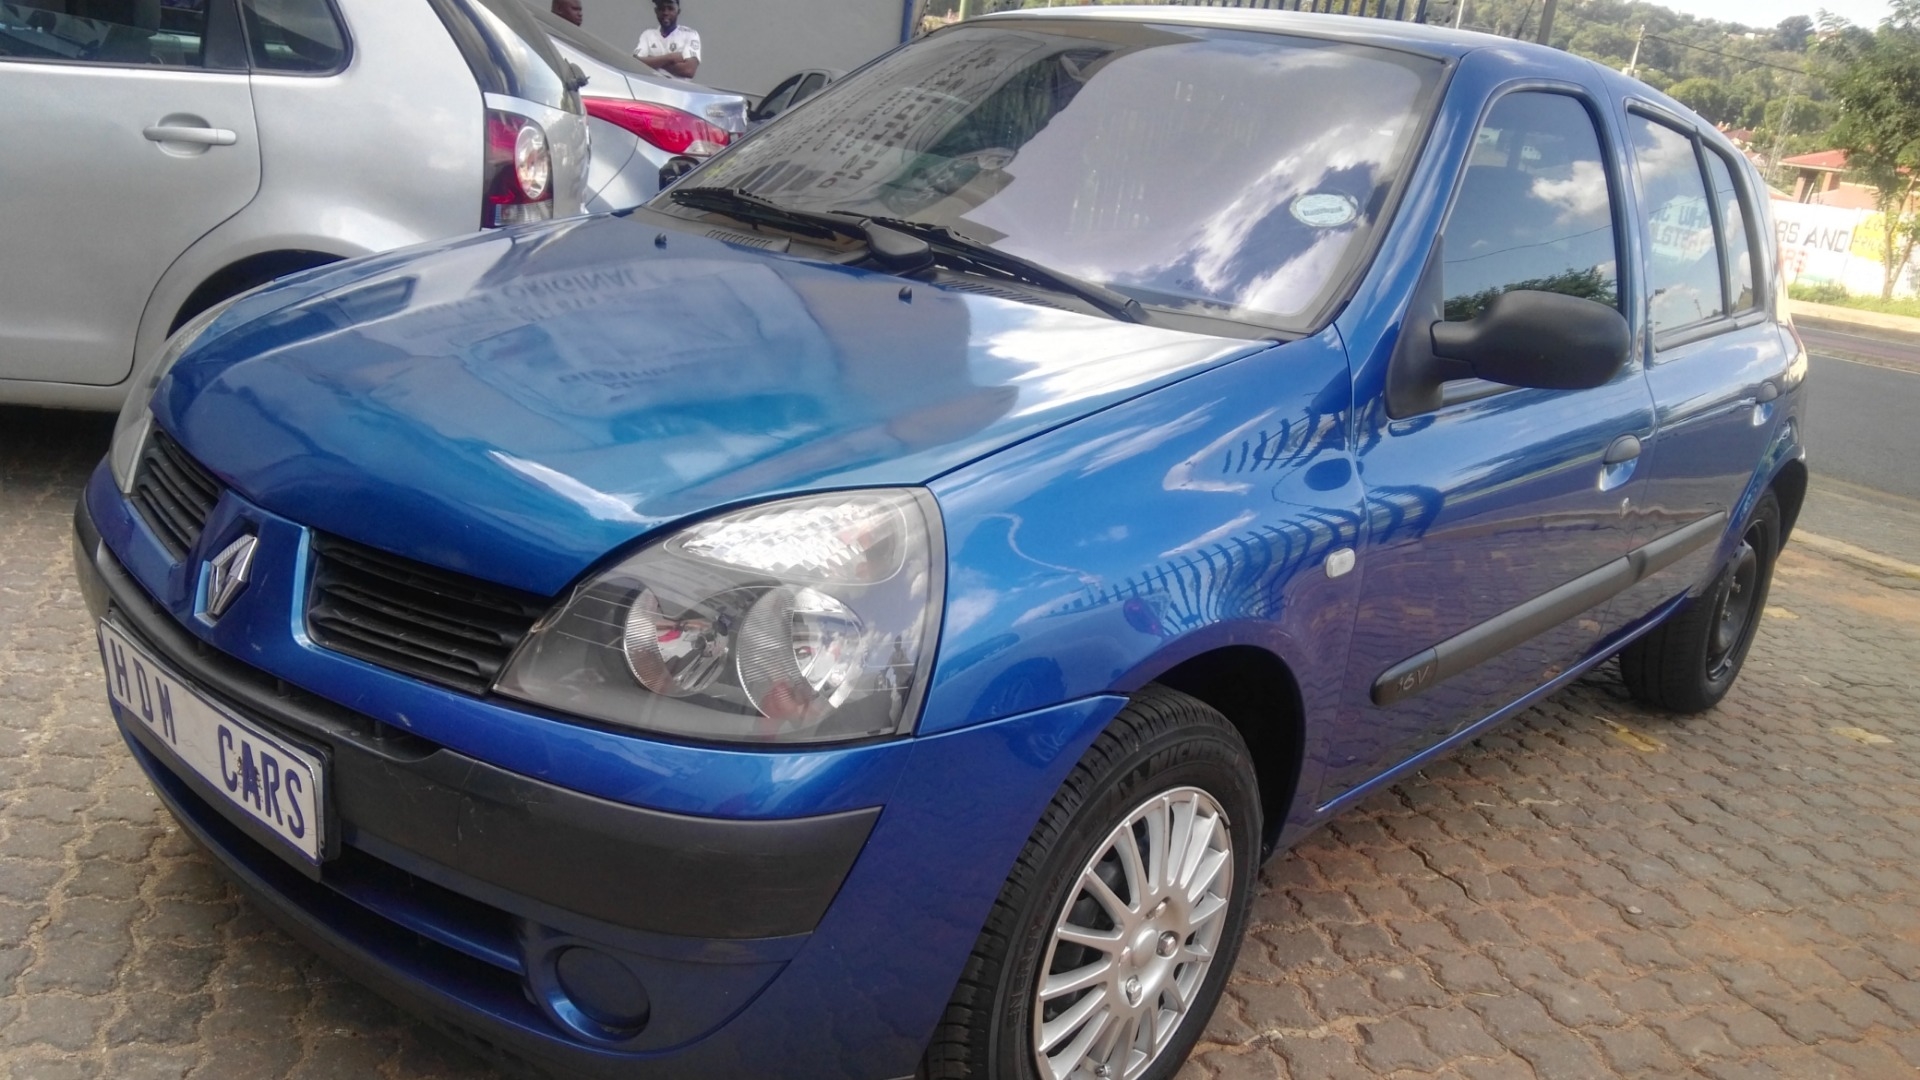 Renault Clio 1.4 Expression 5 door for sale in Gauteng Auto Mart